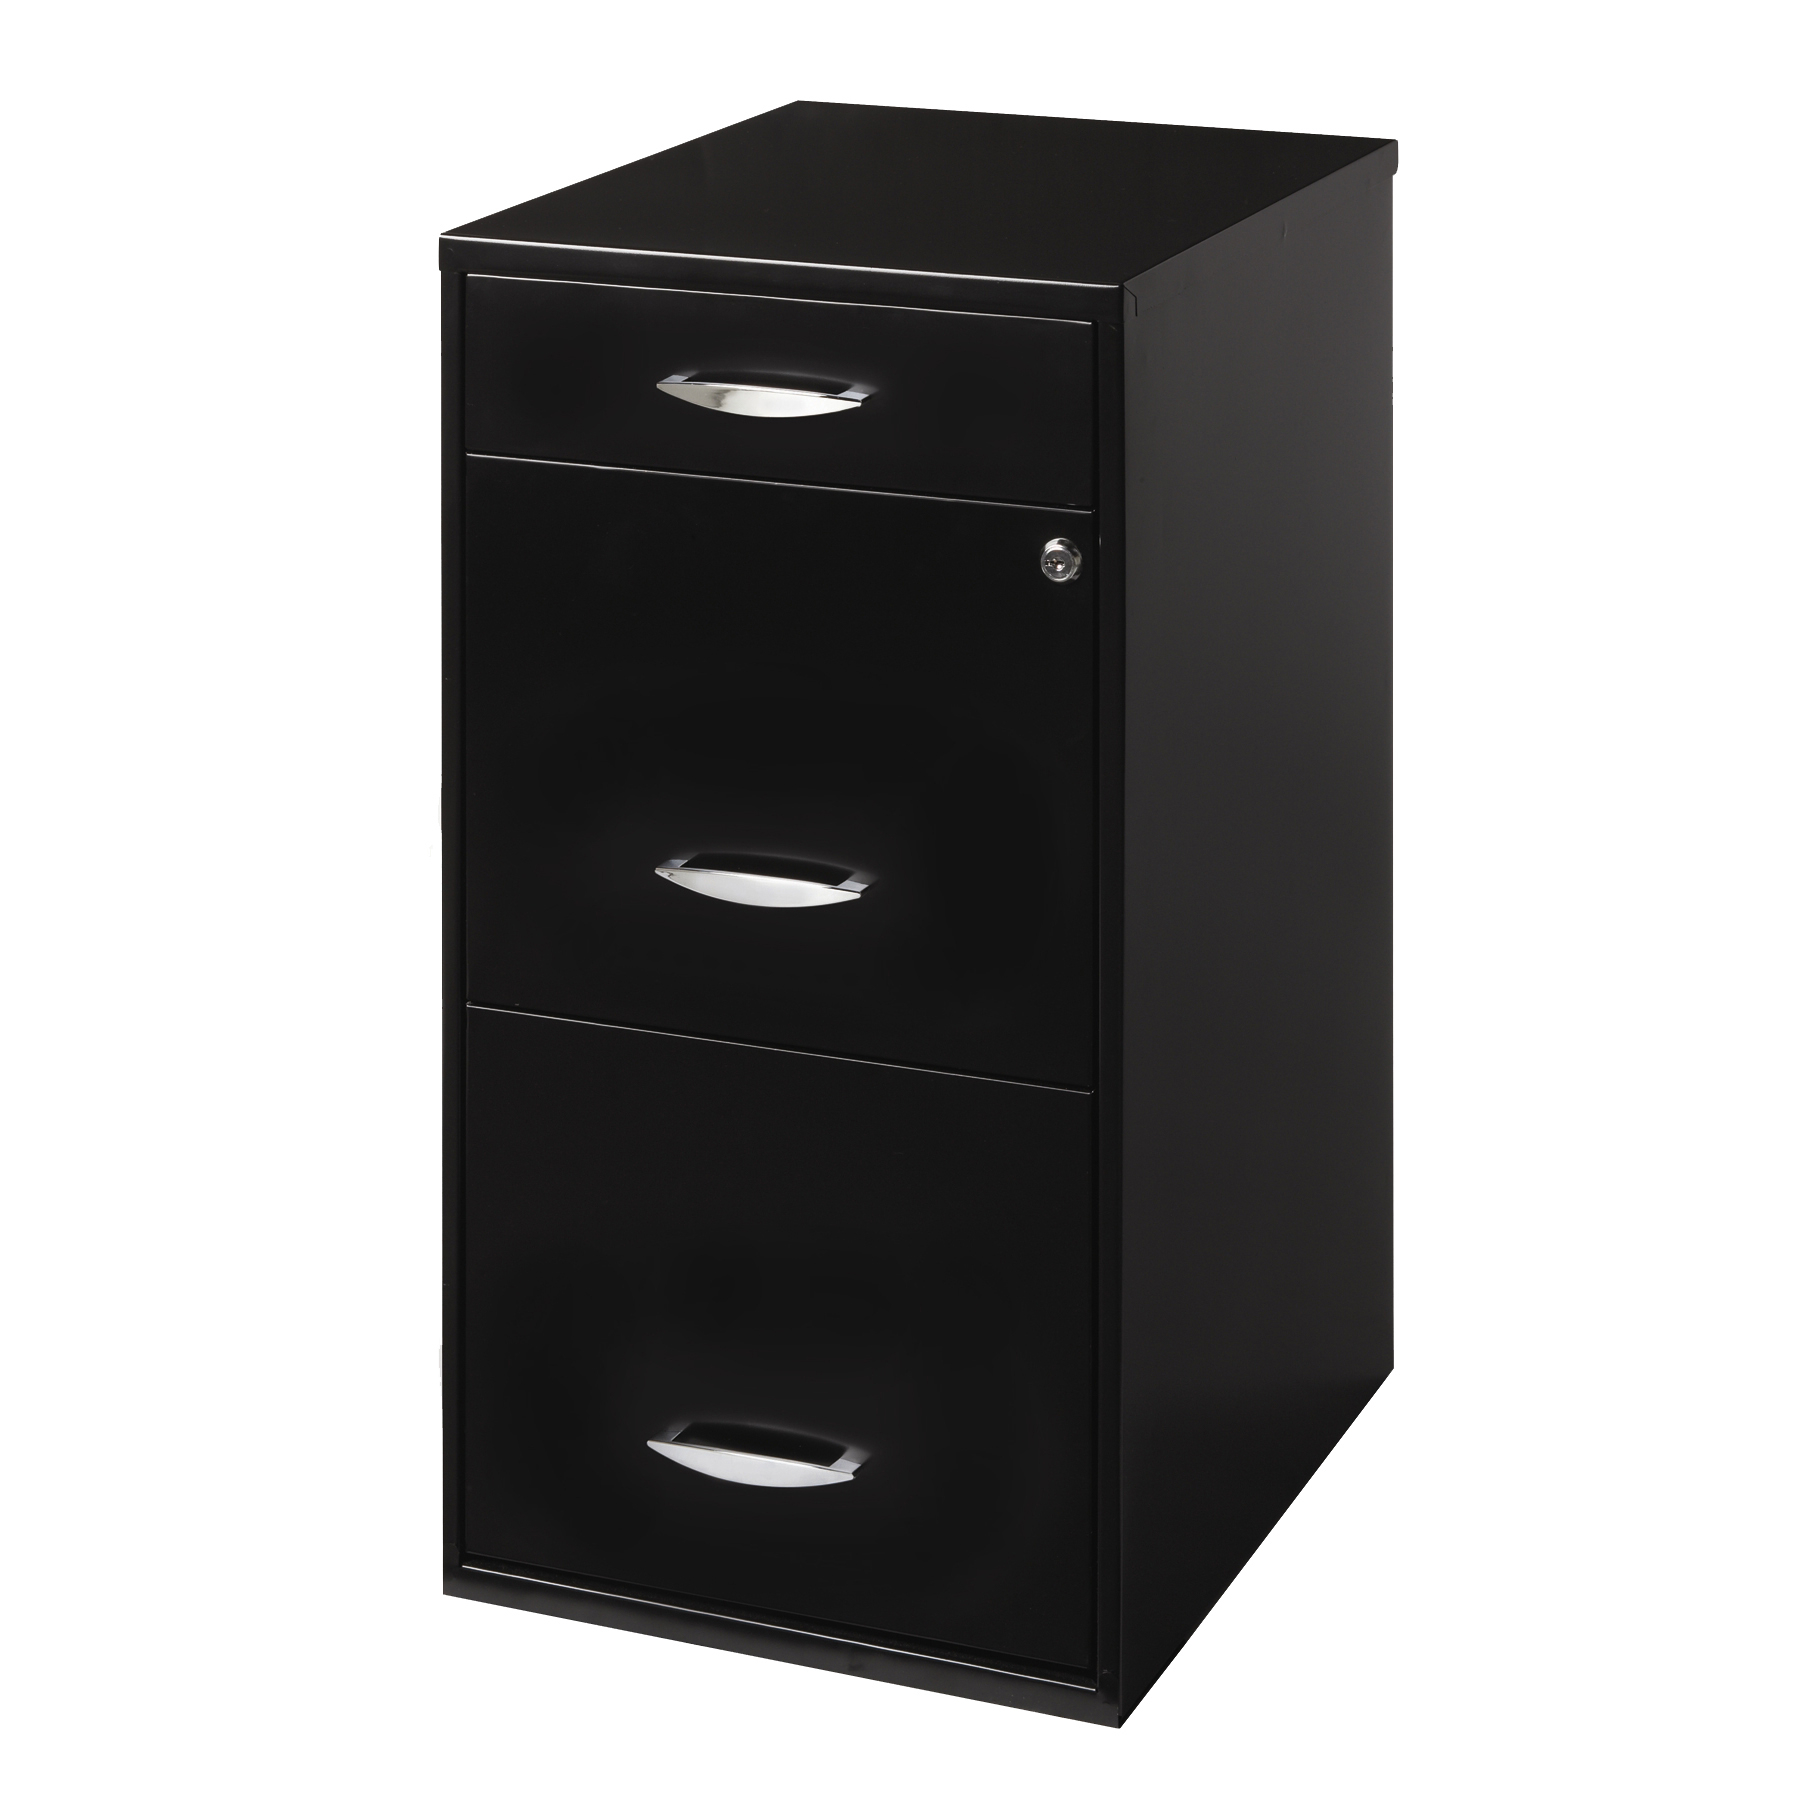 Filing Cabinet 18w 3 Drawer Organizer File Black Walmart within size 1800 X 1800